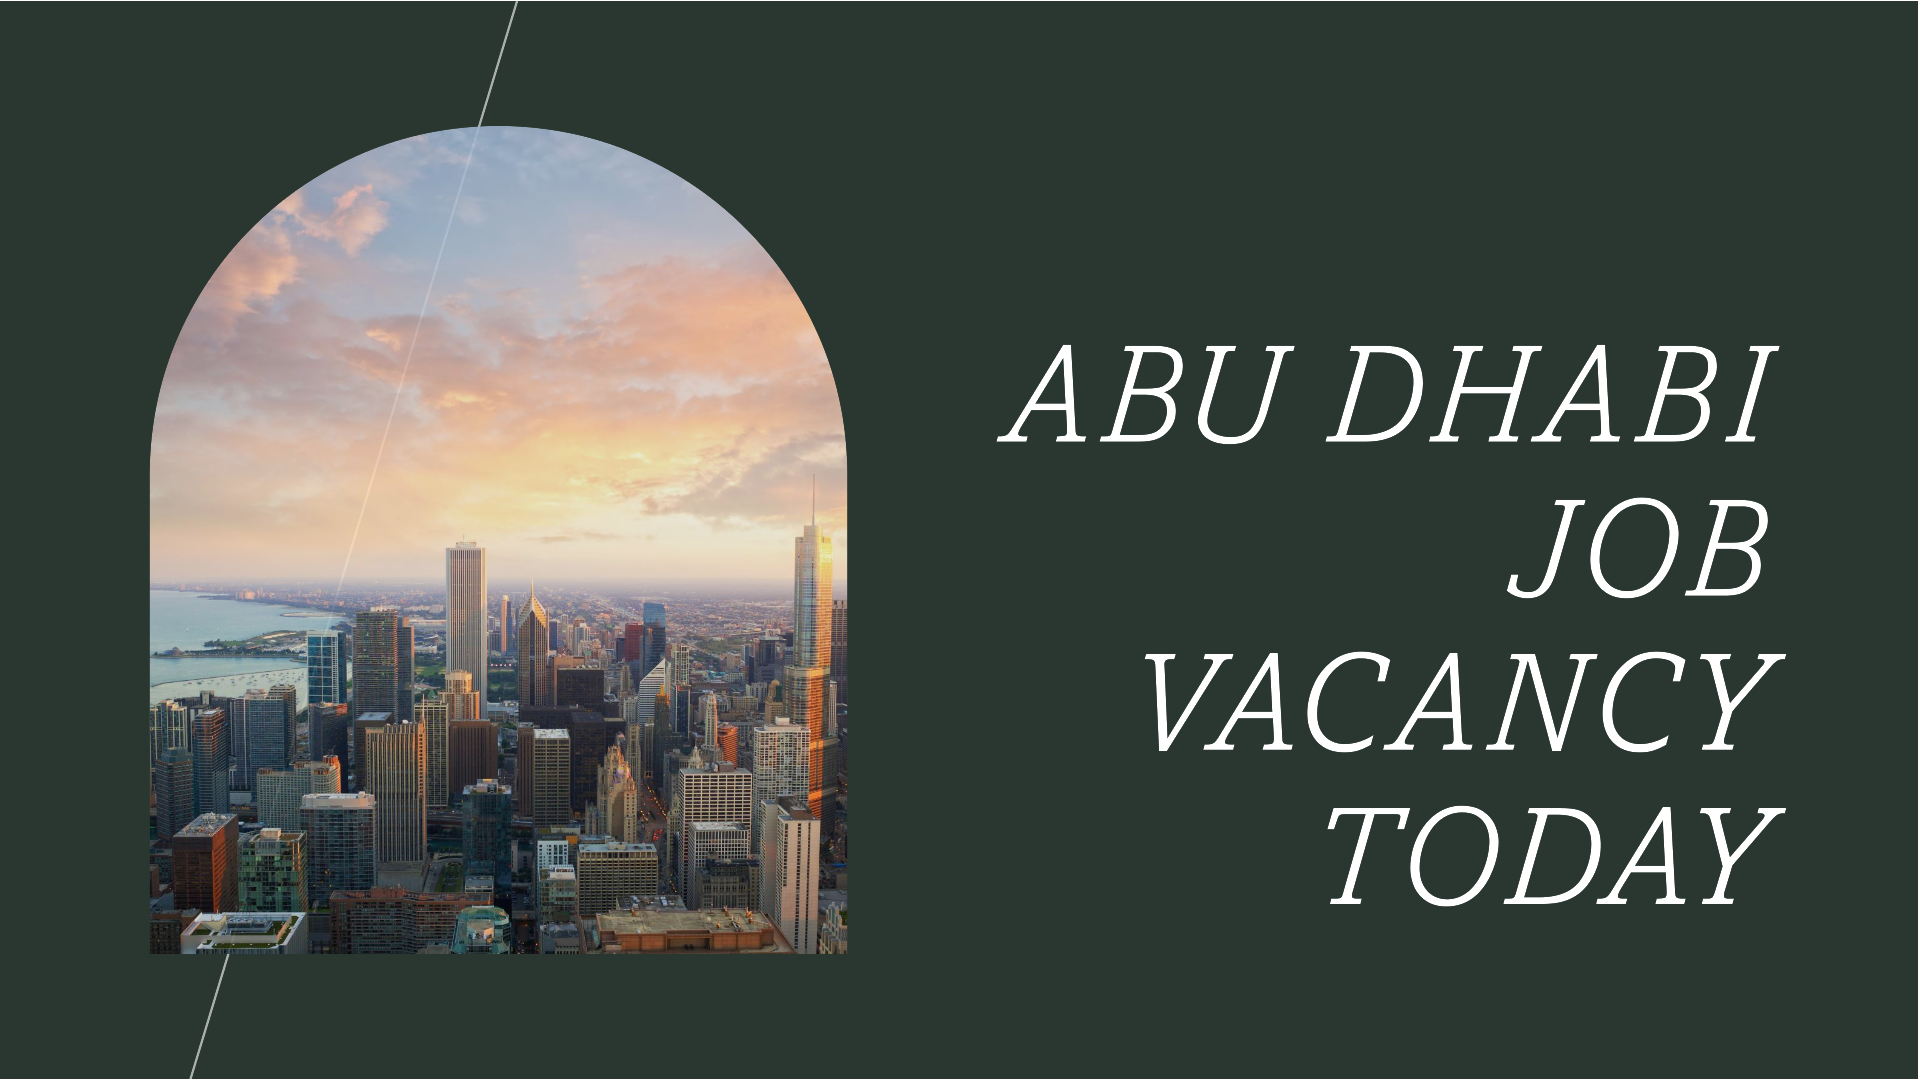 abu dhabi job vacancy for all nationalities